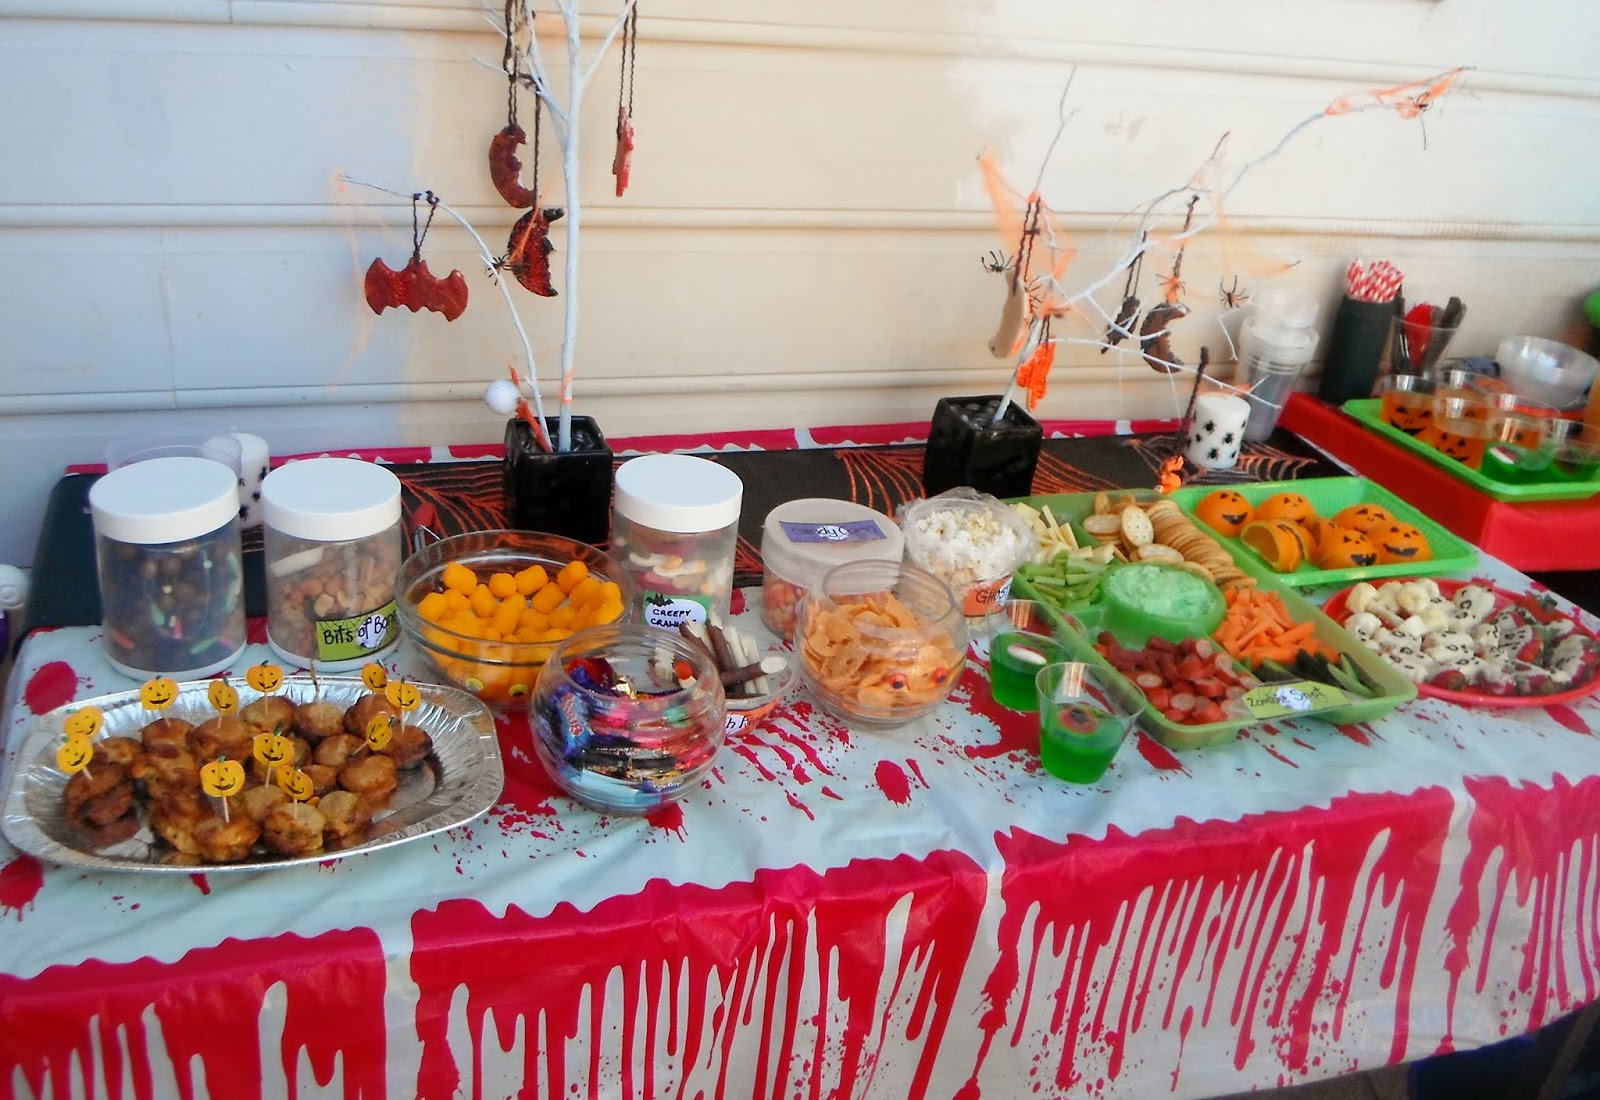 Adult Halloween Party Food Ideas